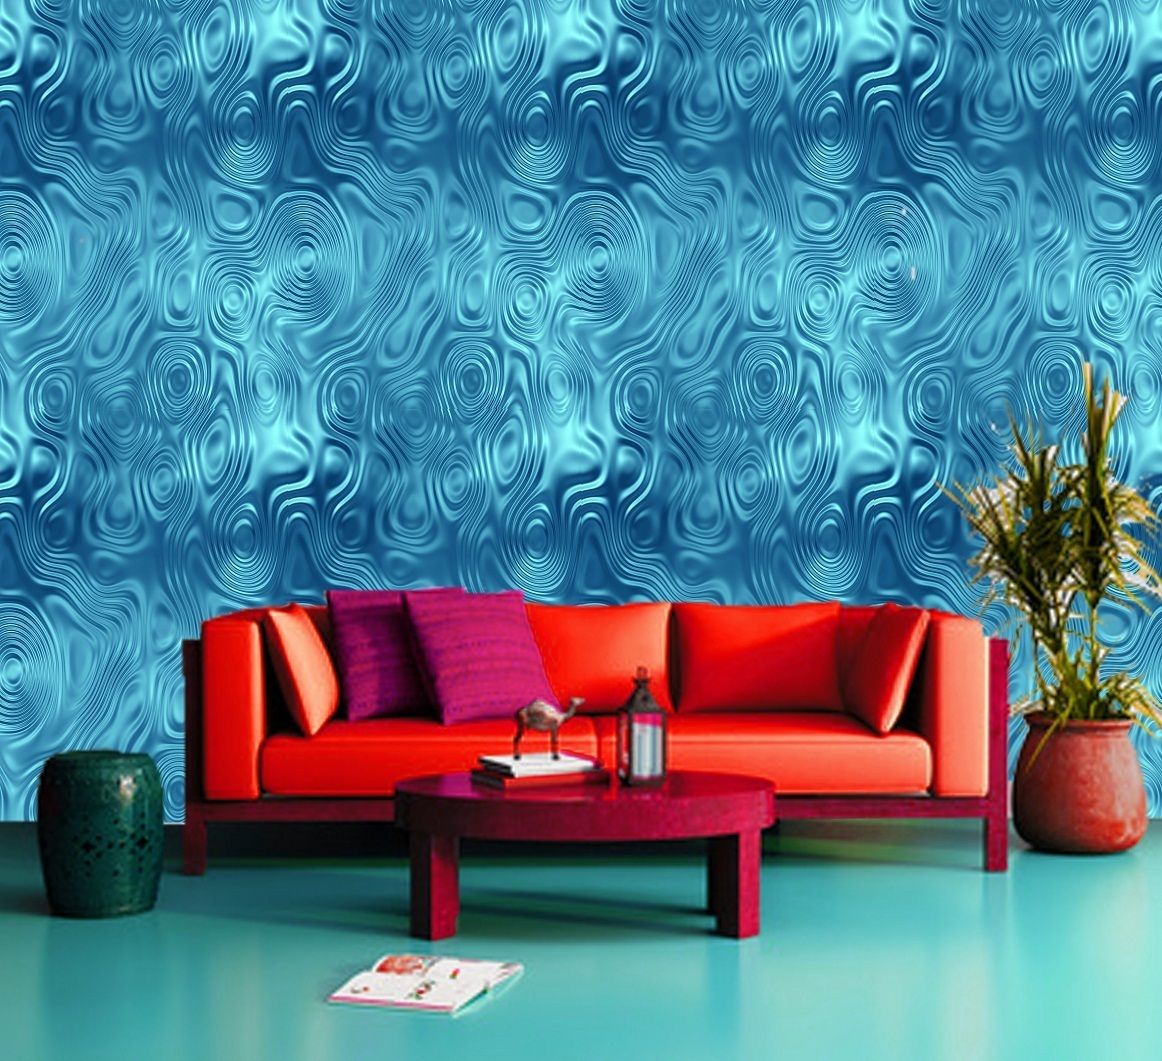 Sea Ocean Blue 3d Wallpaper Wall Mural Decor Art